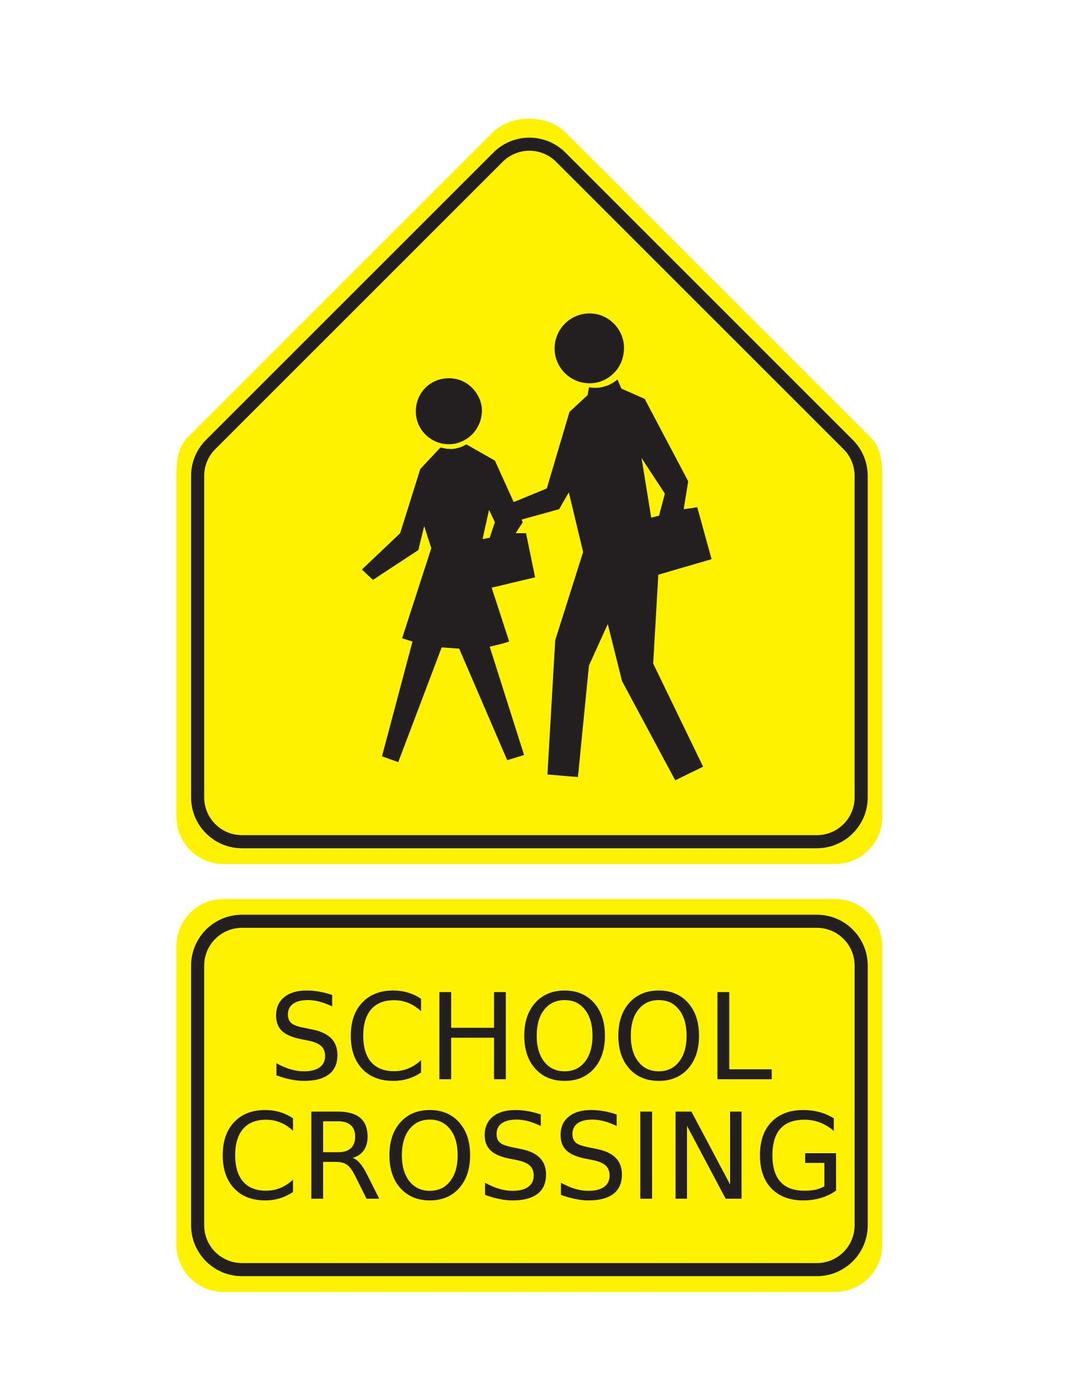 School crossing sign png transparent